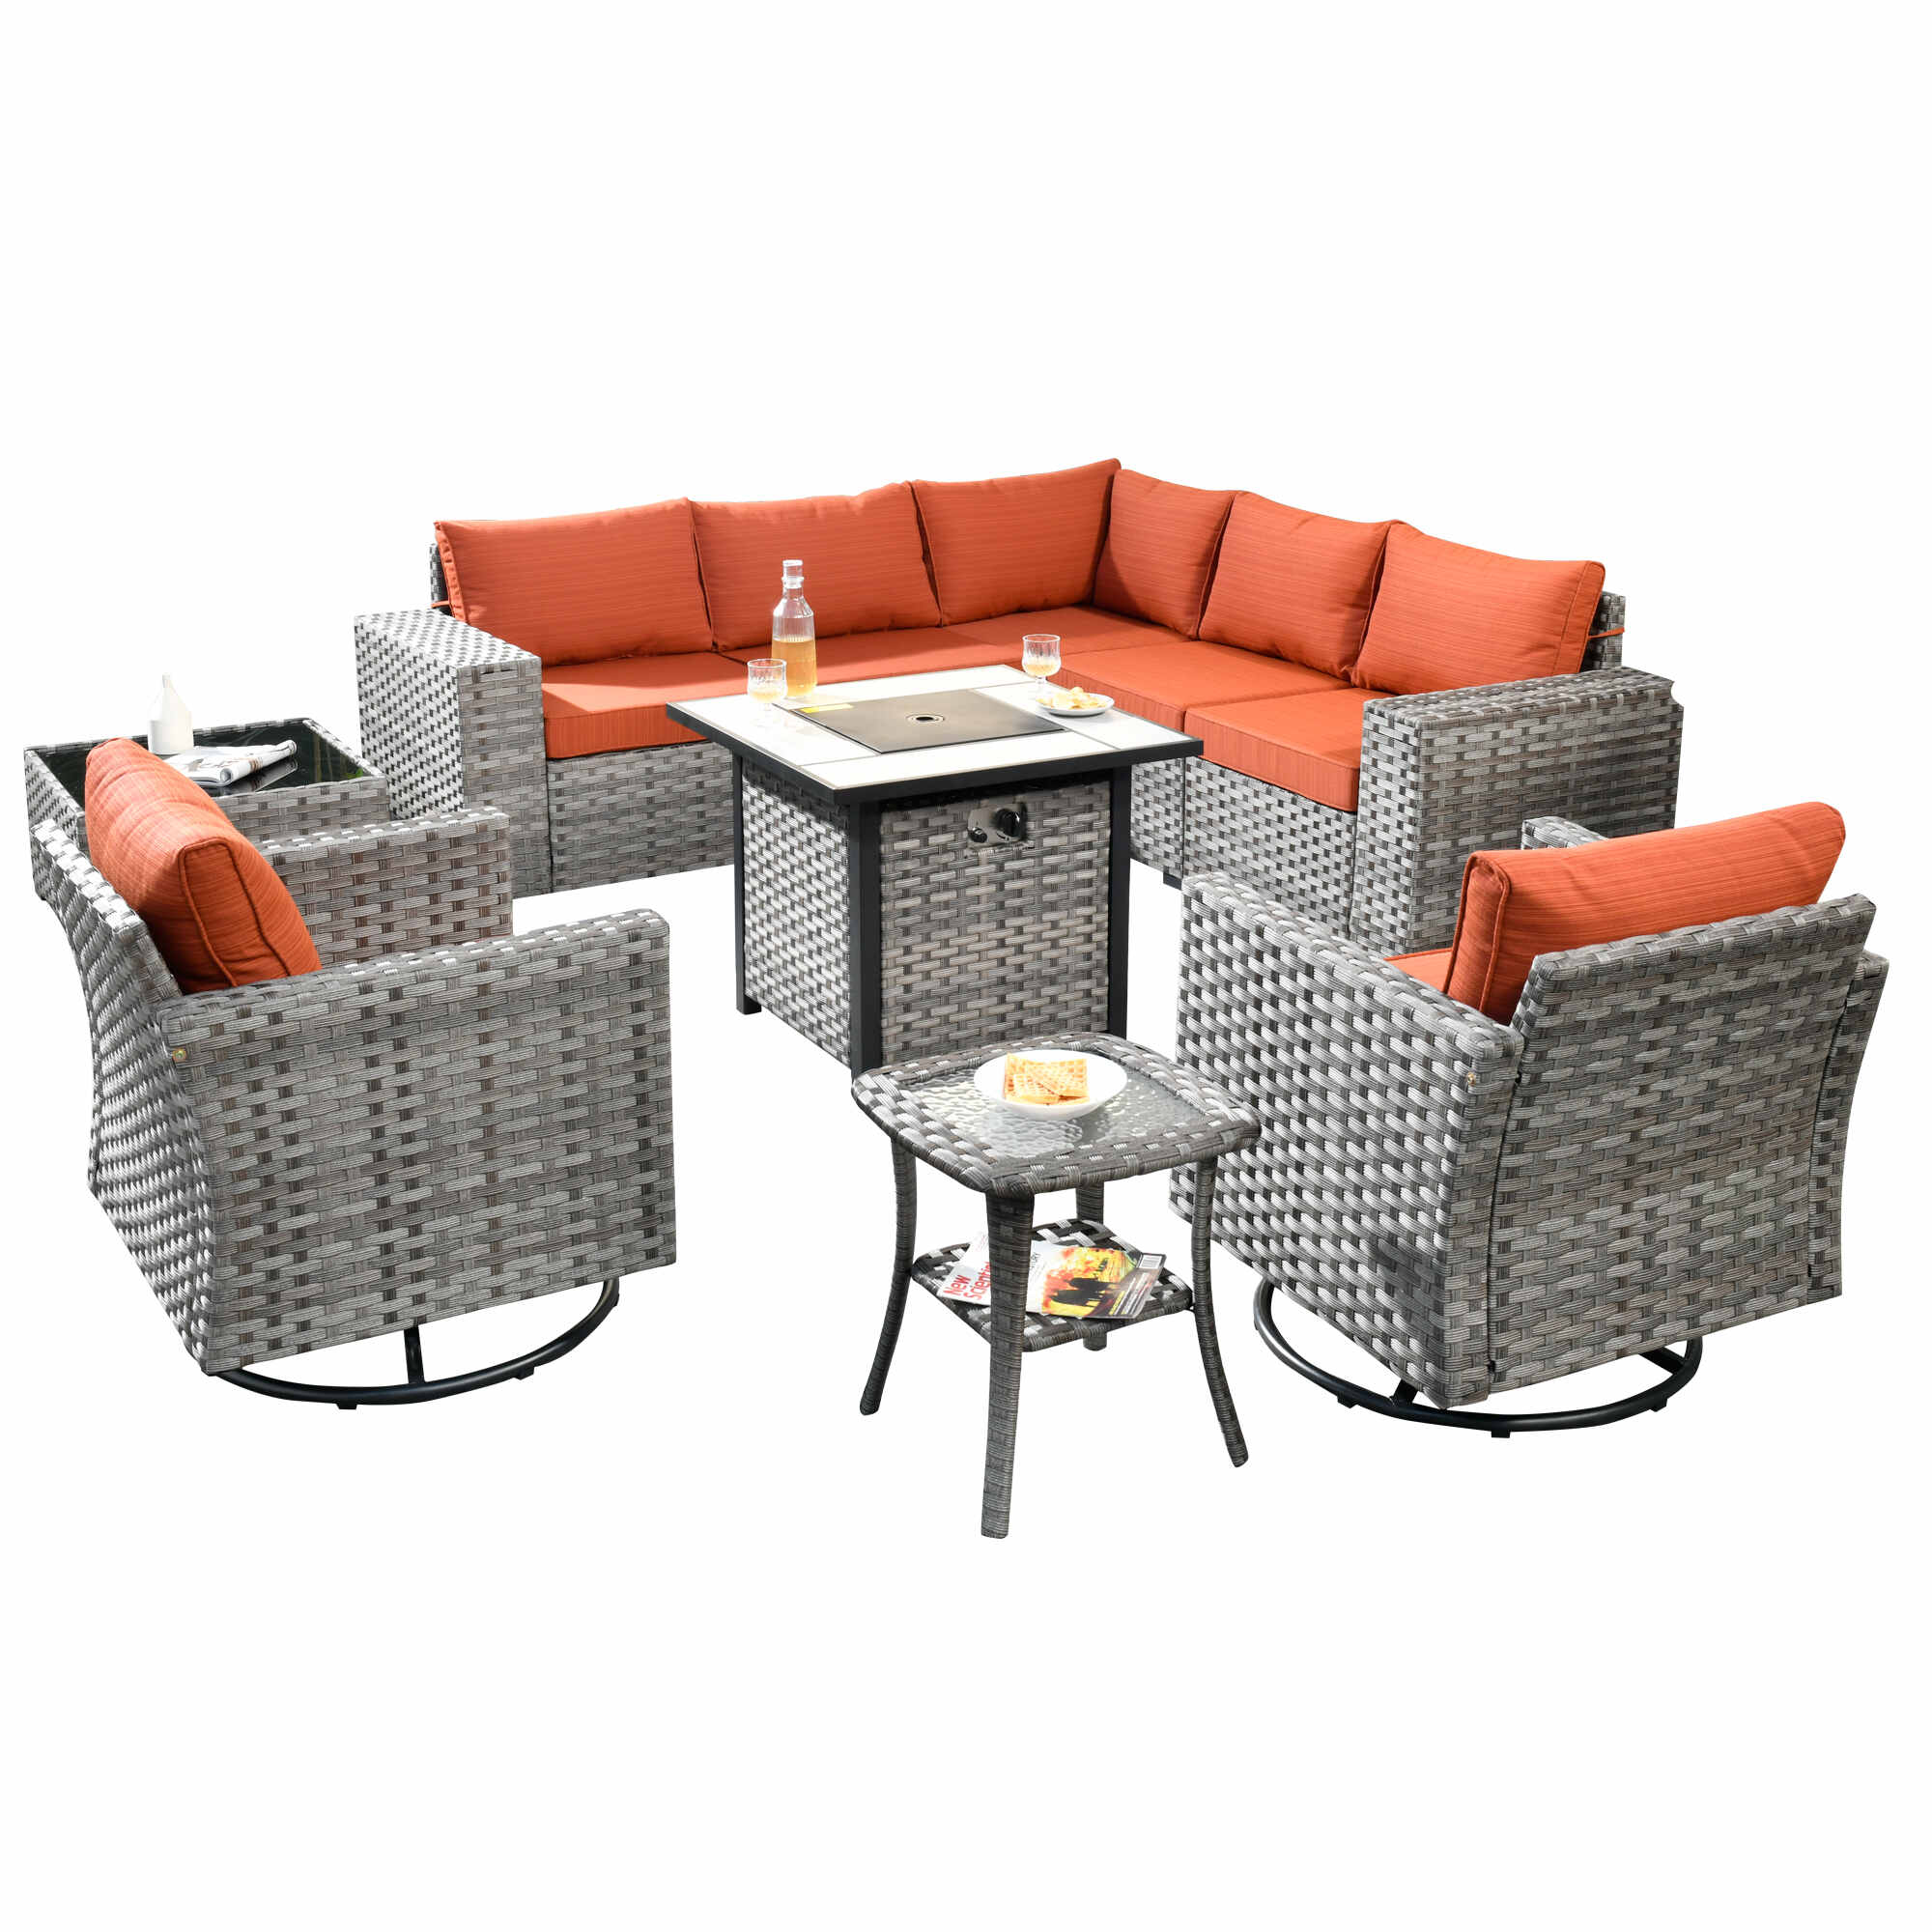 Ovios patio furnitrue orange set with fire pit table